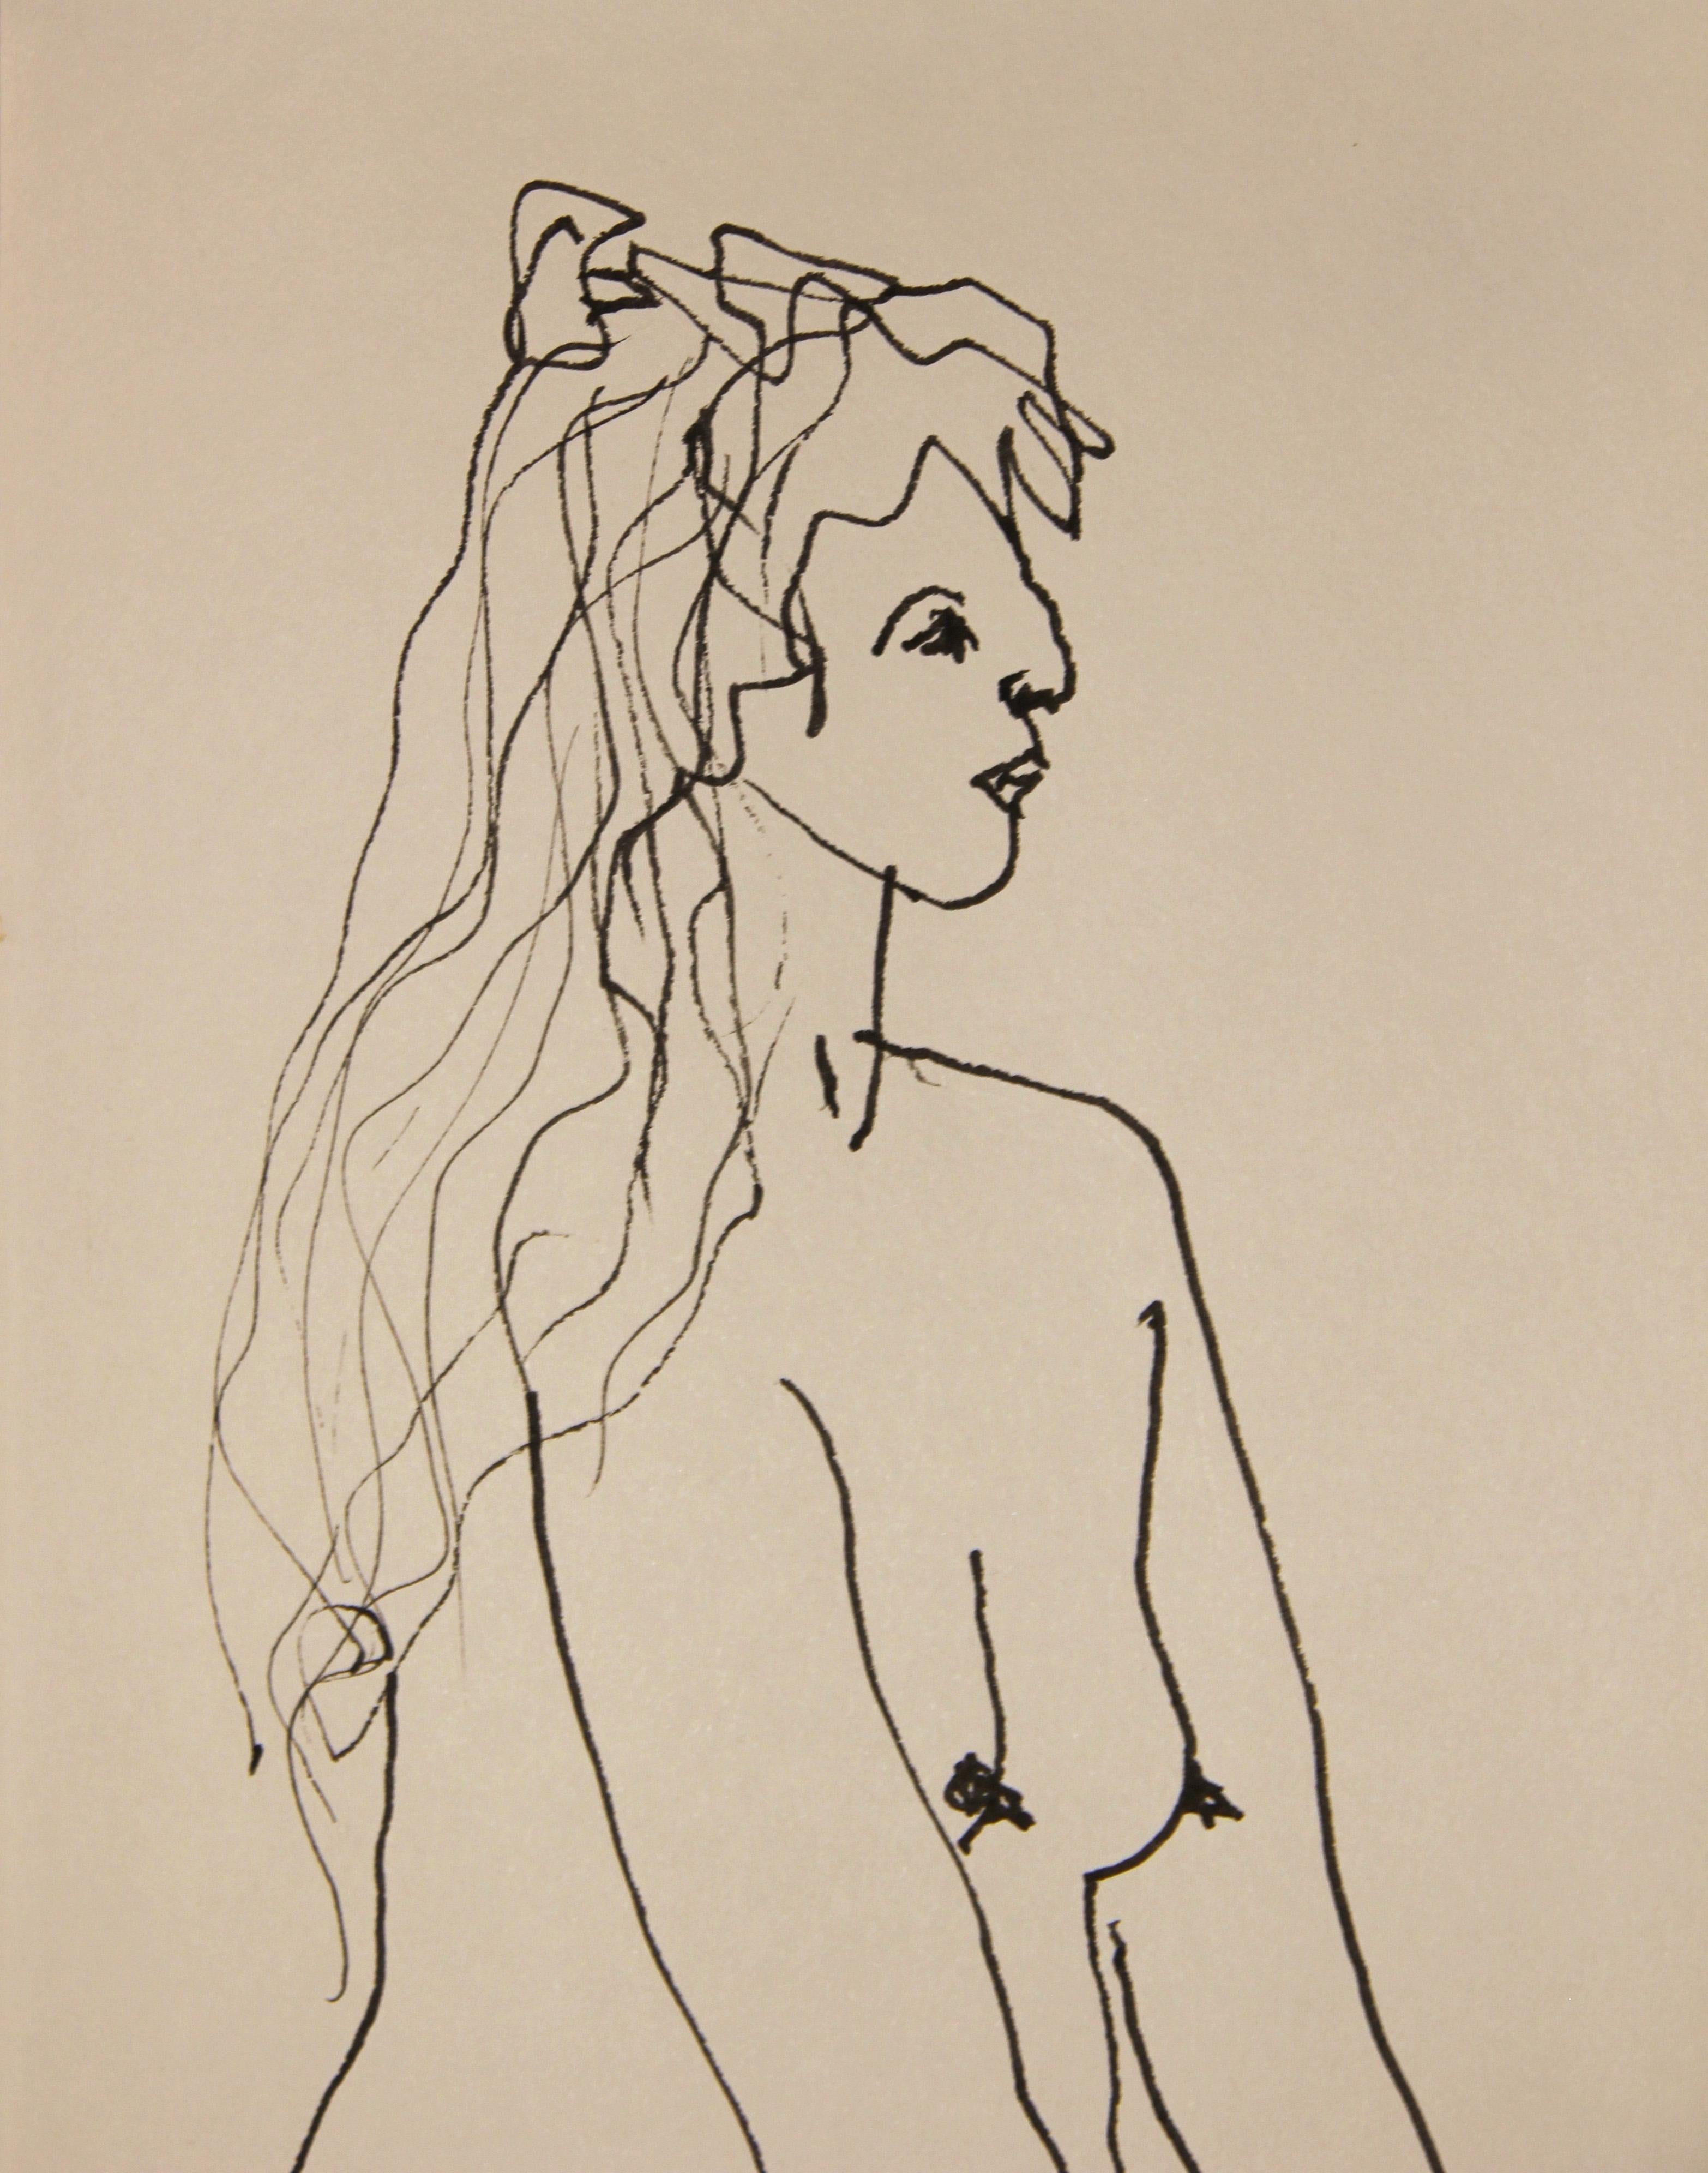 Modern Abstract Black Ink Line Drawing of a Seated Female Nude - Beige Figurative Art by Frank Dolejska